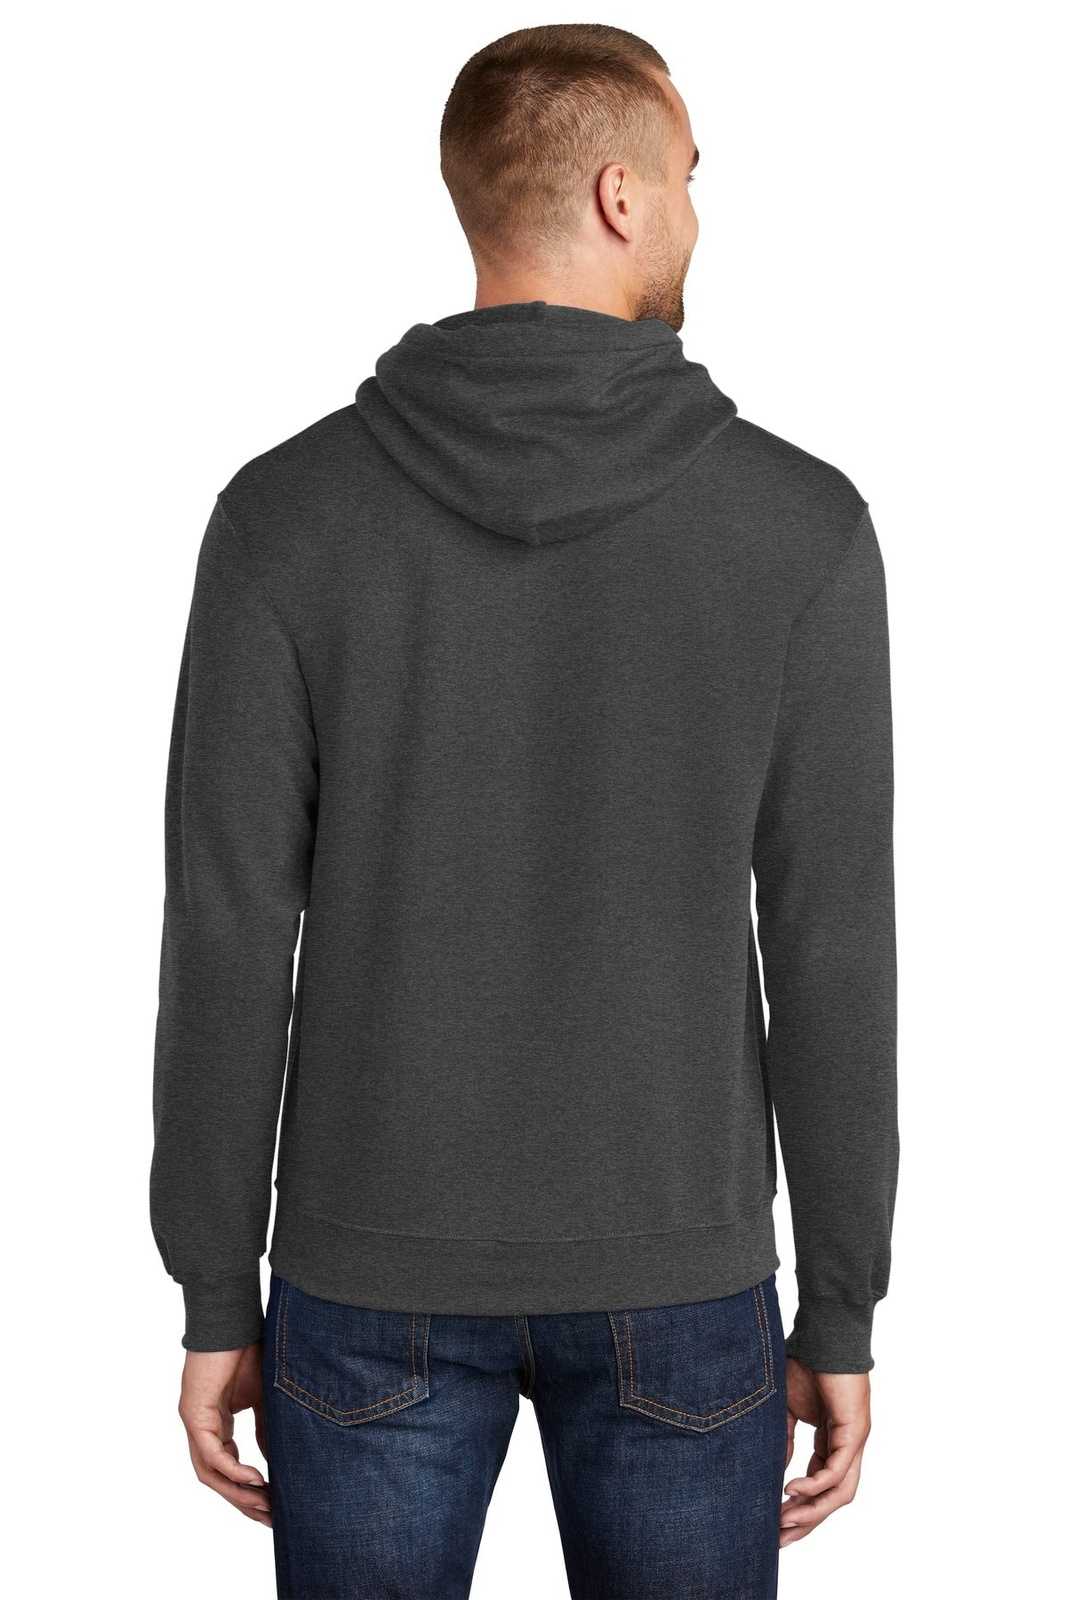 Port & Company PC78HT Tall Core Fleece Pullover Hooded Sweatshirt - Dark Heather Gray - HIT a Double - 1